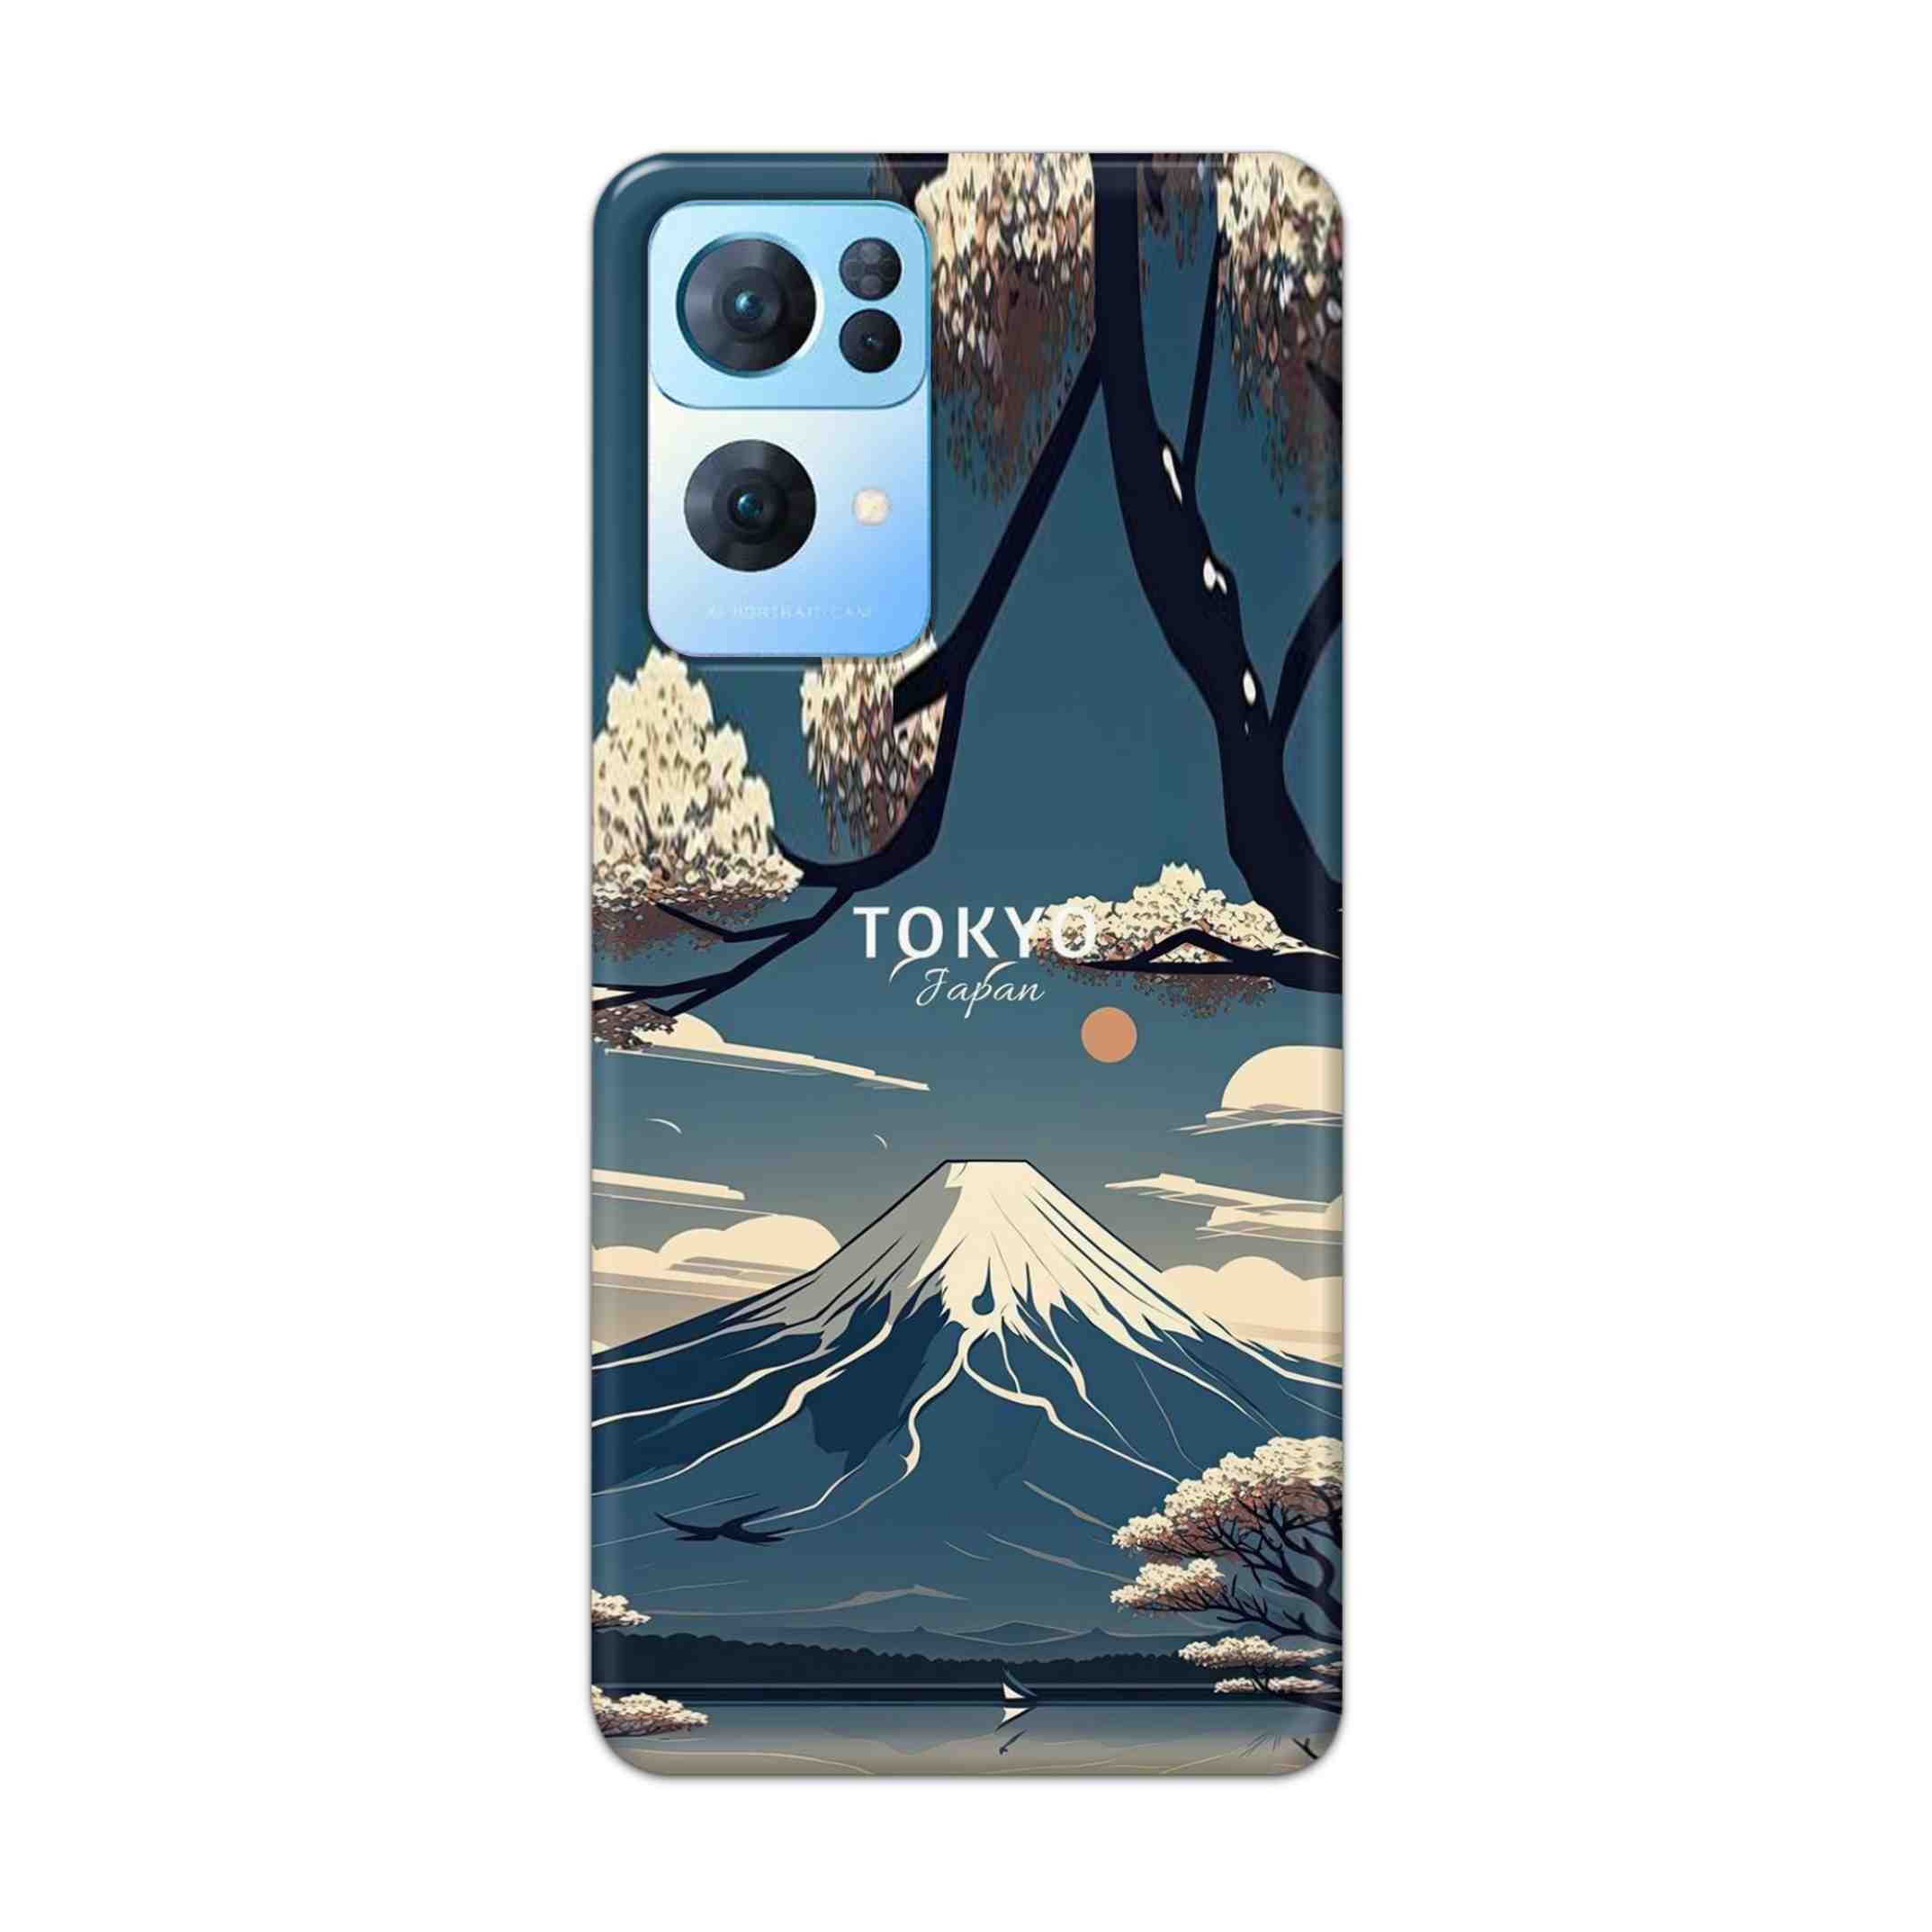 Buy Tokyo Hard Back Mobile Phone Case Cover For Oppo Reno 7 Pro Online